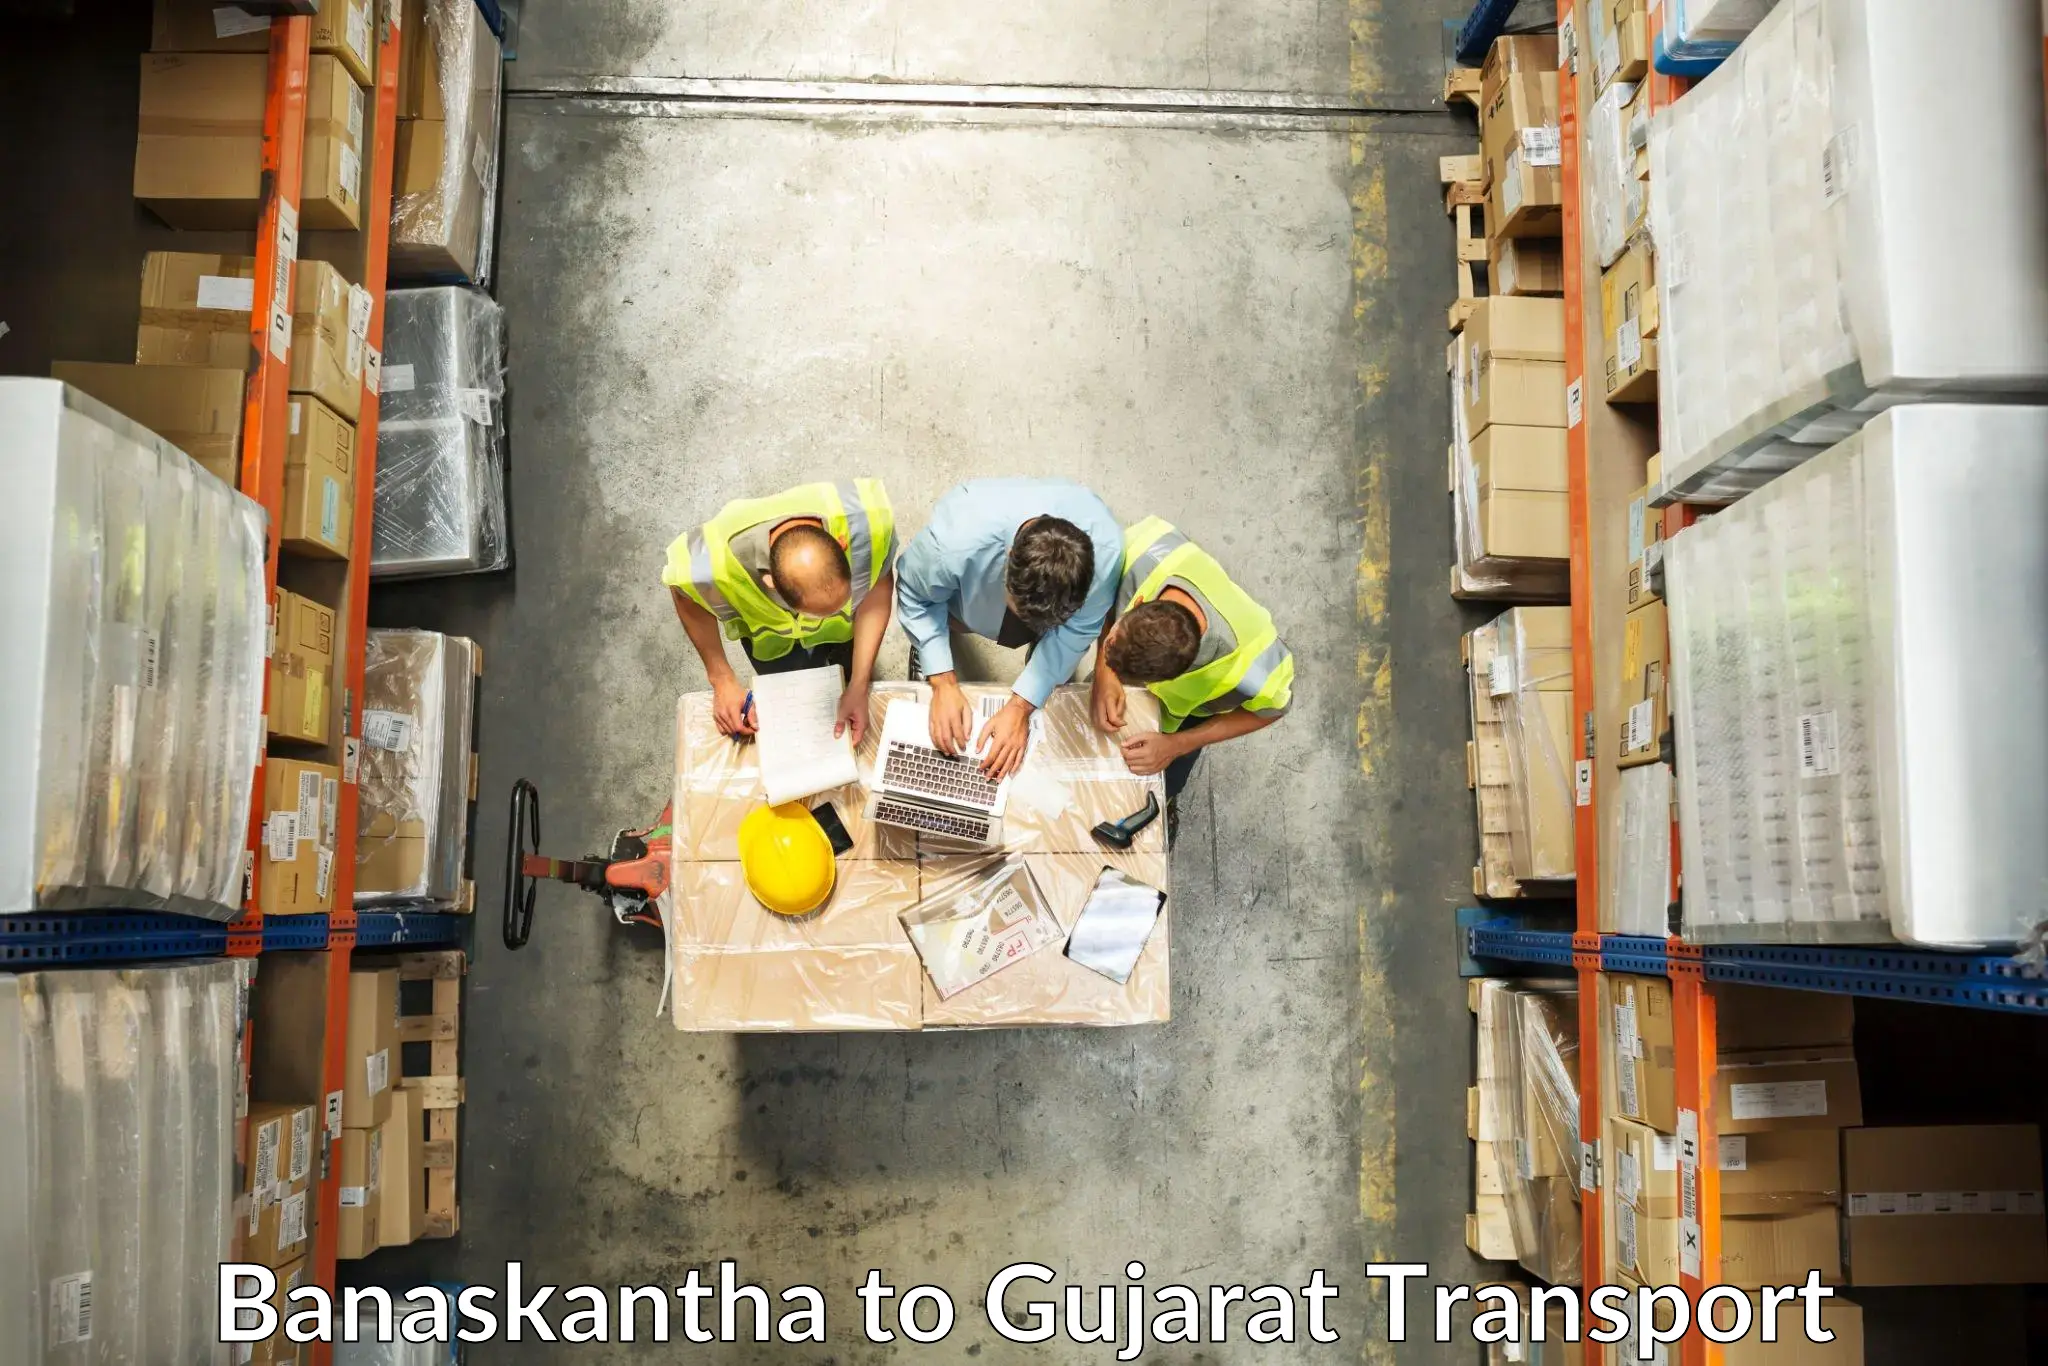 Truck transport companies in India Banaskantha to Valsad